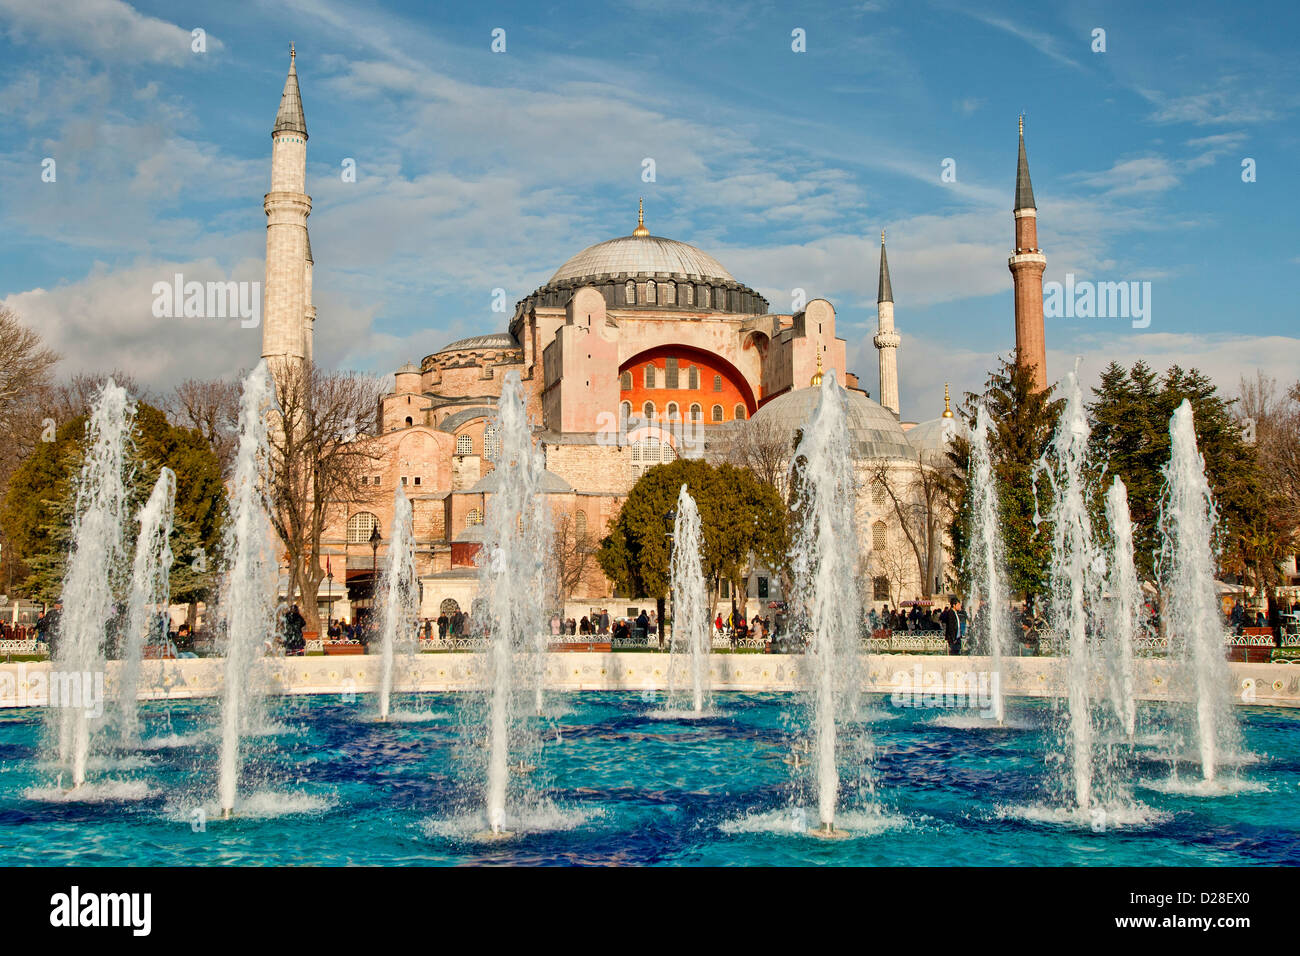 Türkei Istanbul - Hagia Sophia (Aya Sofya Sancta Sofia) Moschee Museum und UNESCO-Website mit Brunnen in Sultanahmet Square Park Stockfoto